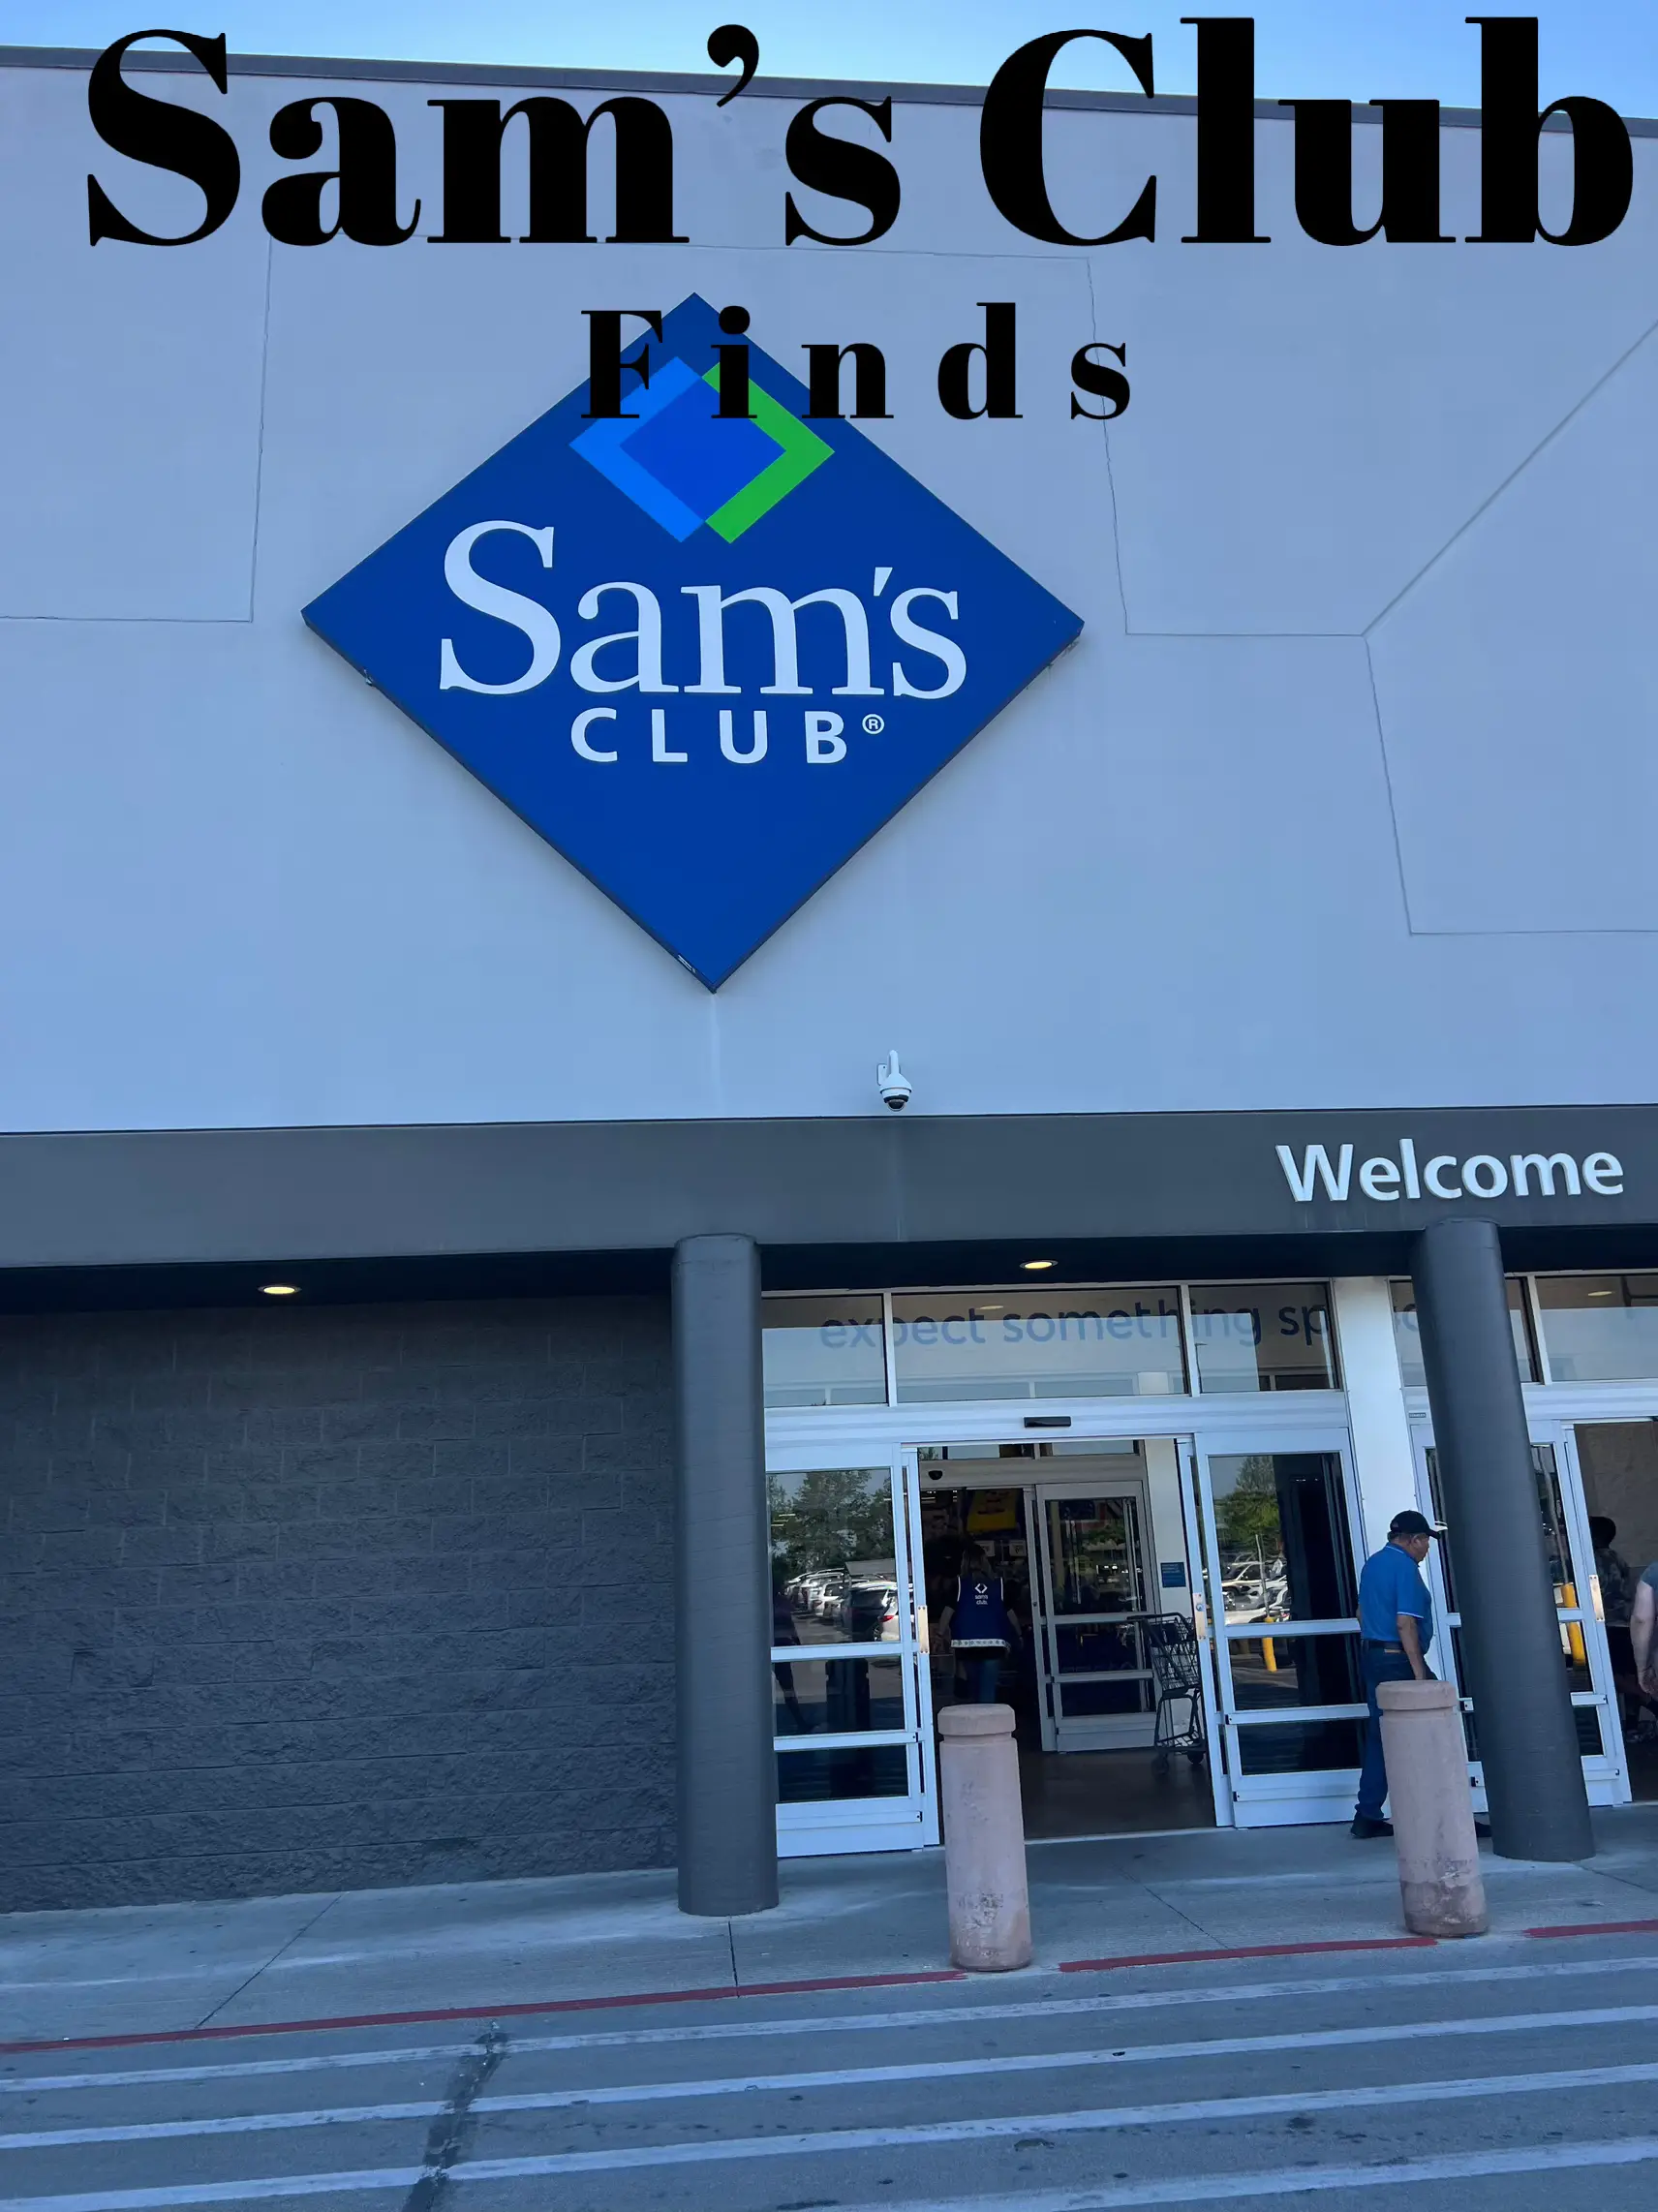 SAM'S CLUB NEW FINDS! 